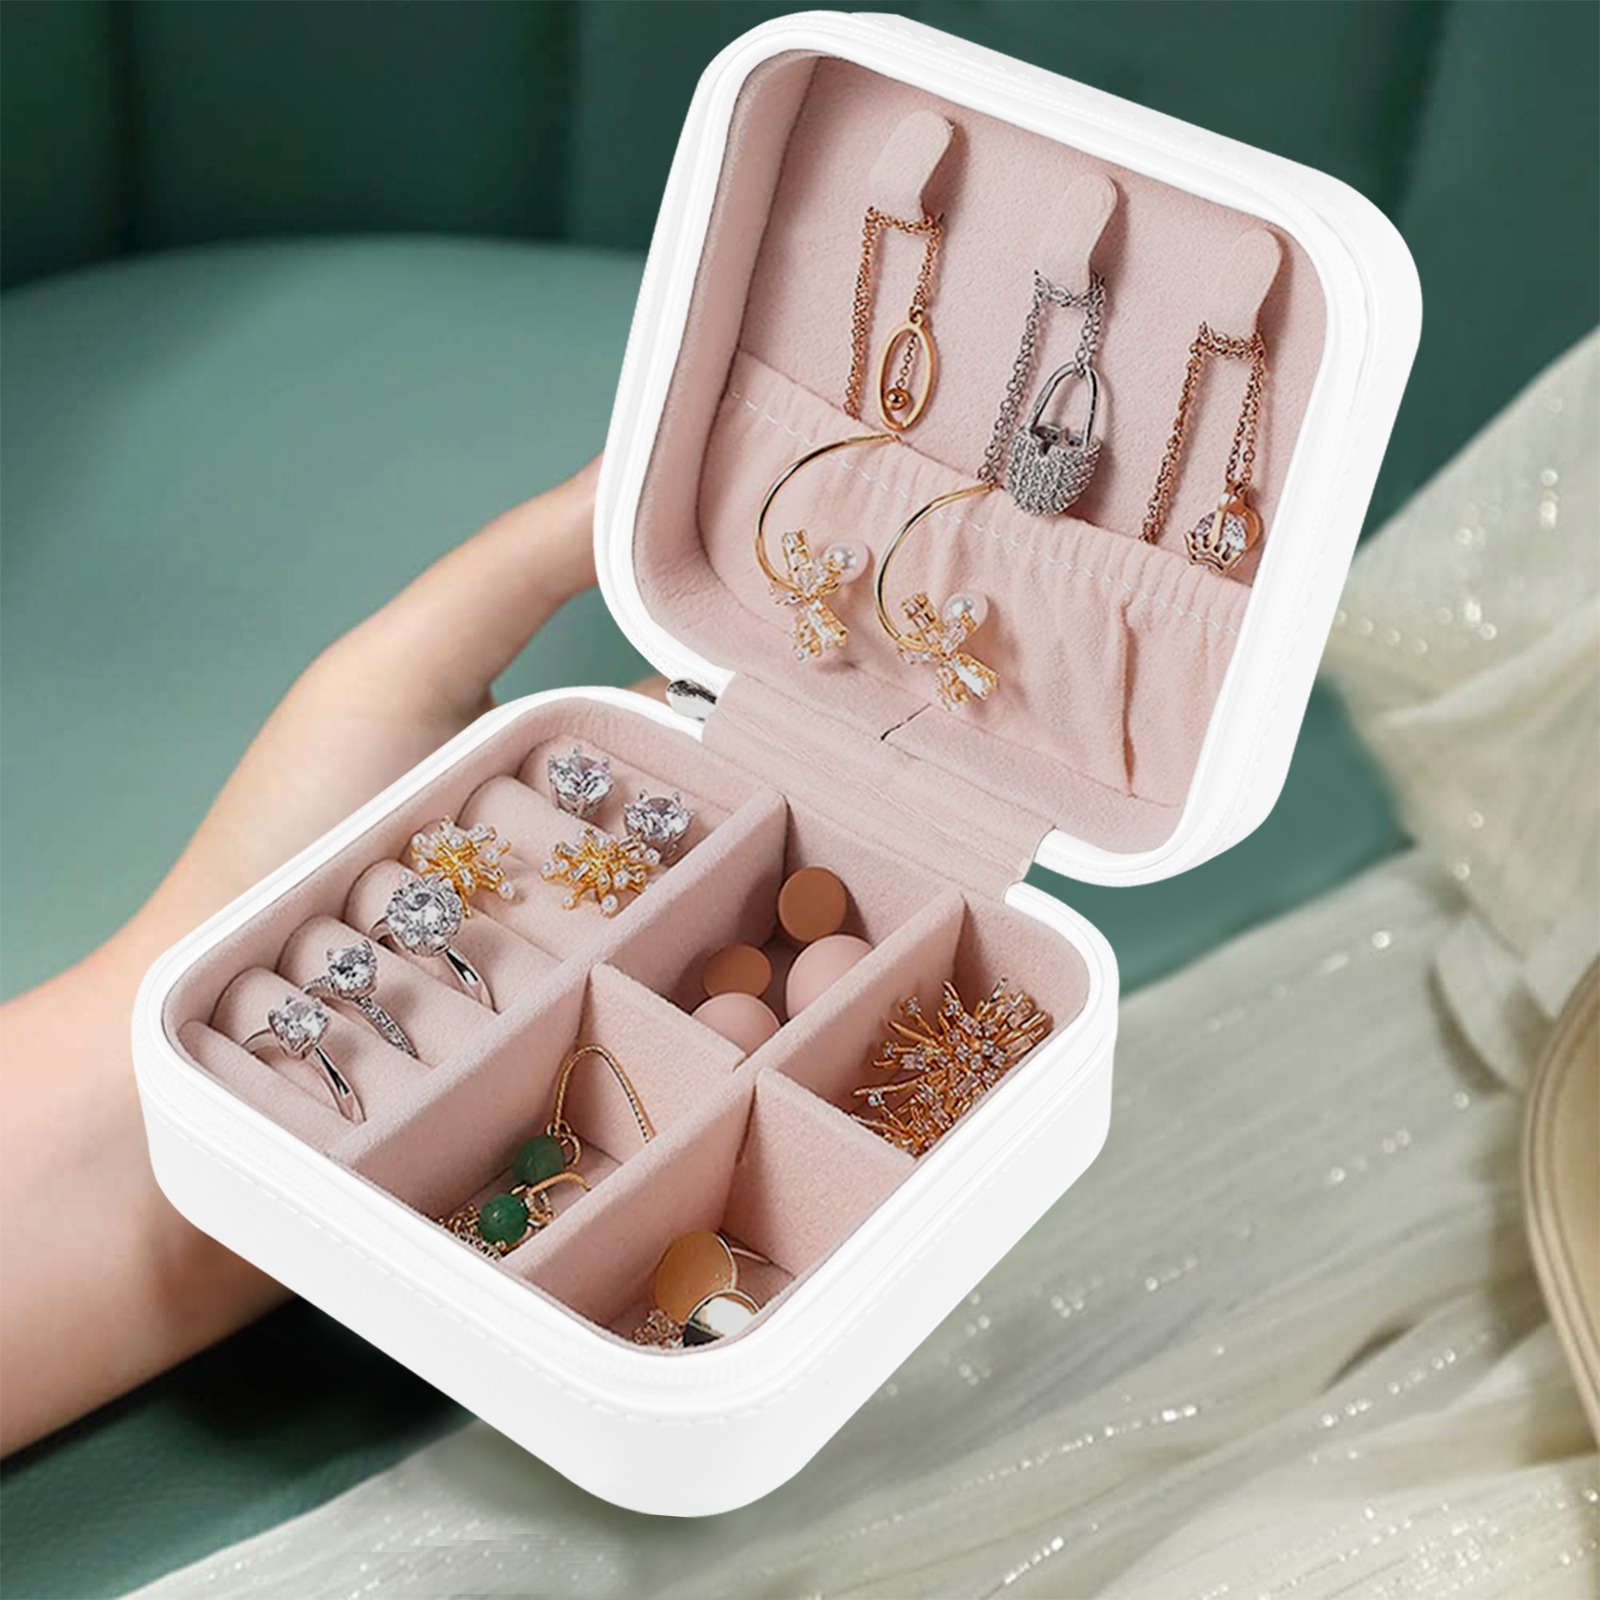 Ayana Custom Printed Travel Jewelry Box